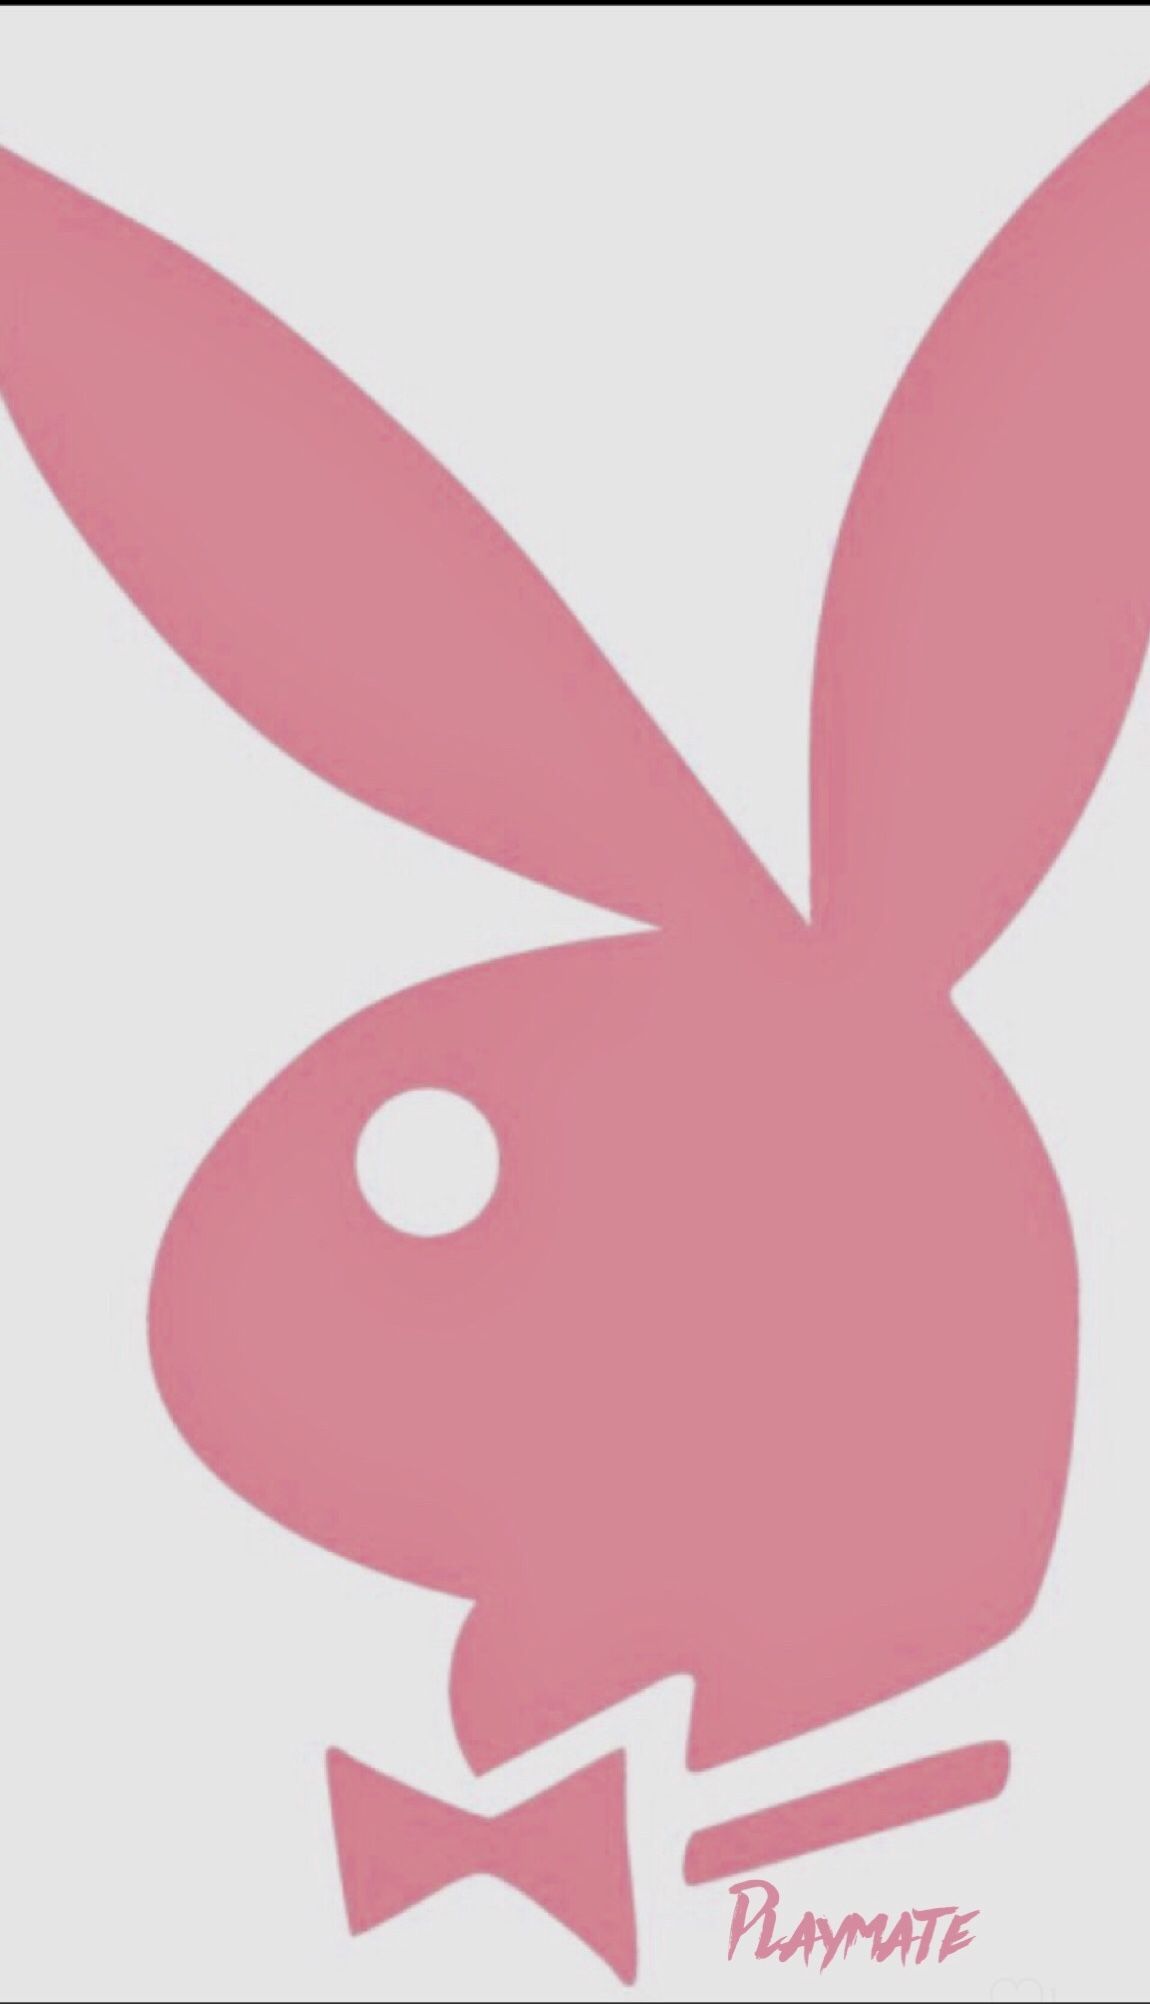 Playboy Bunny Logo Wallpaper